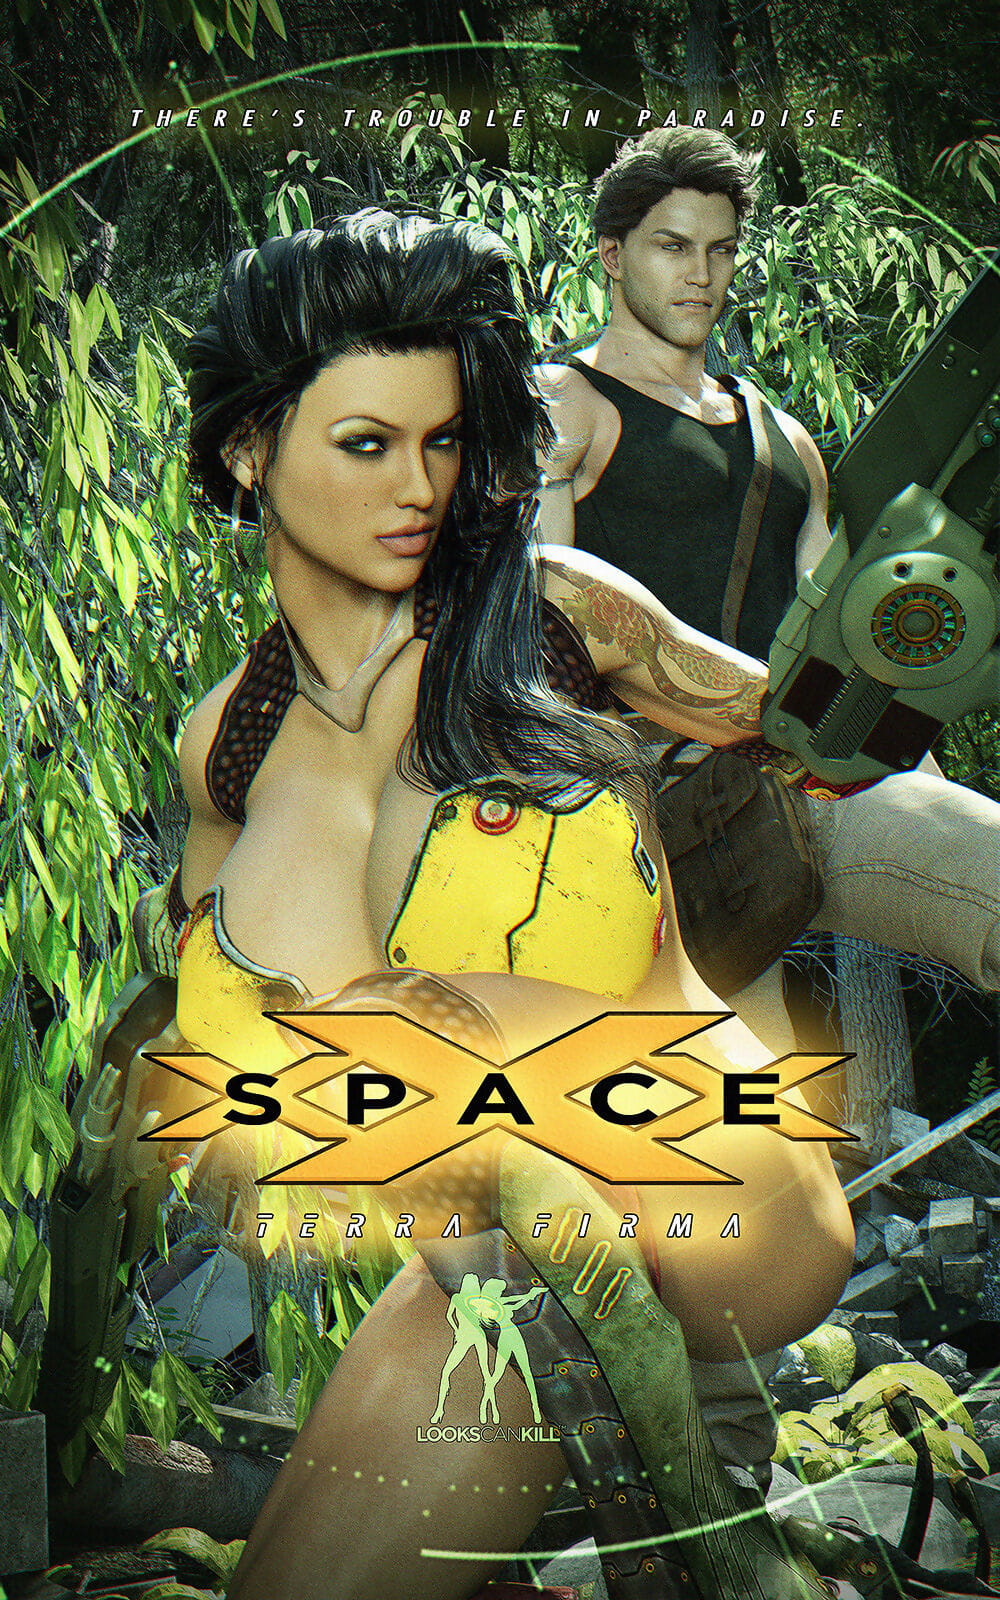 Looks Can Kill - Space XXX - Terra Firma page 1